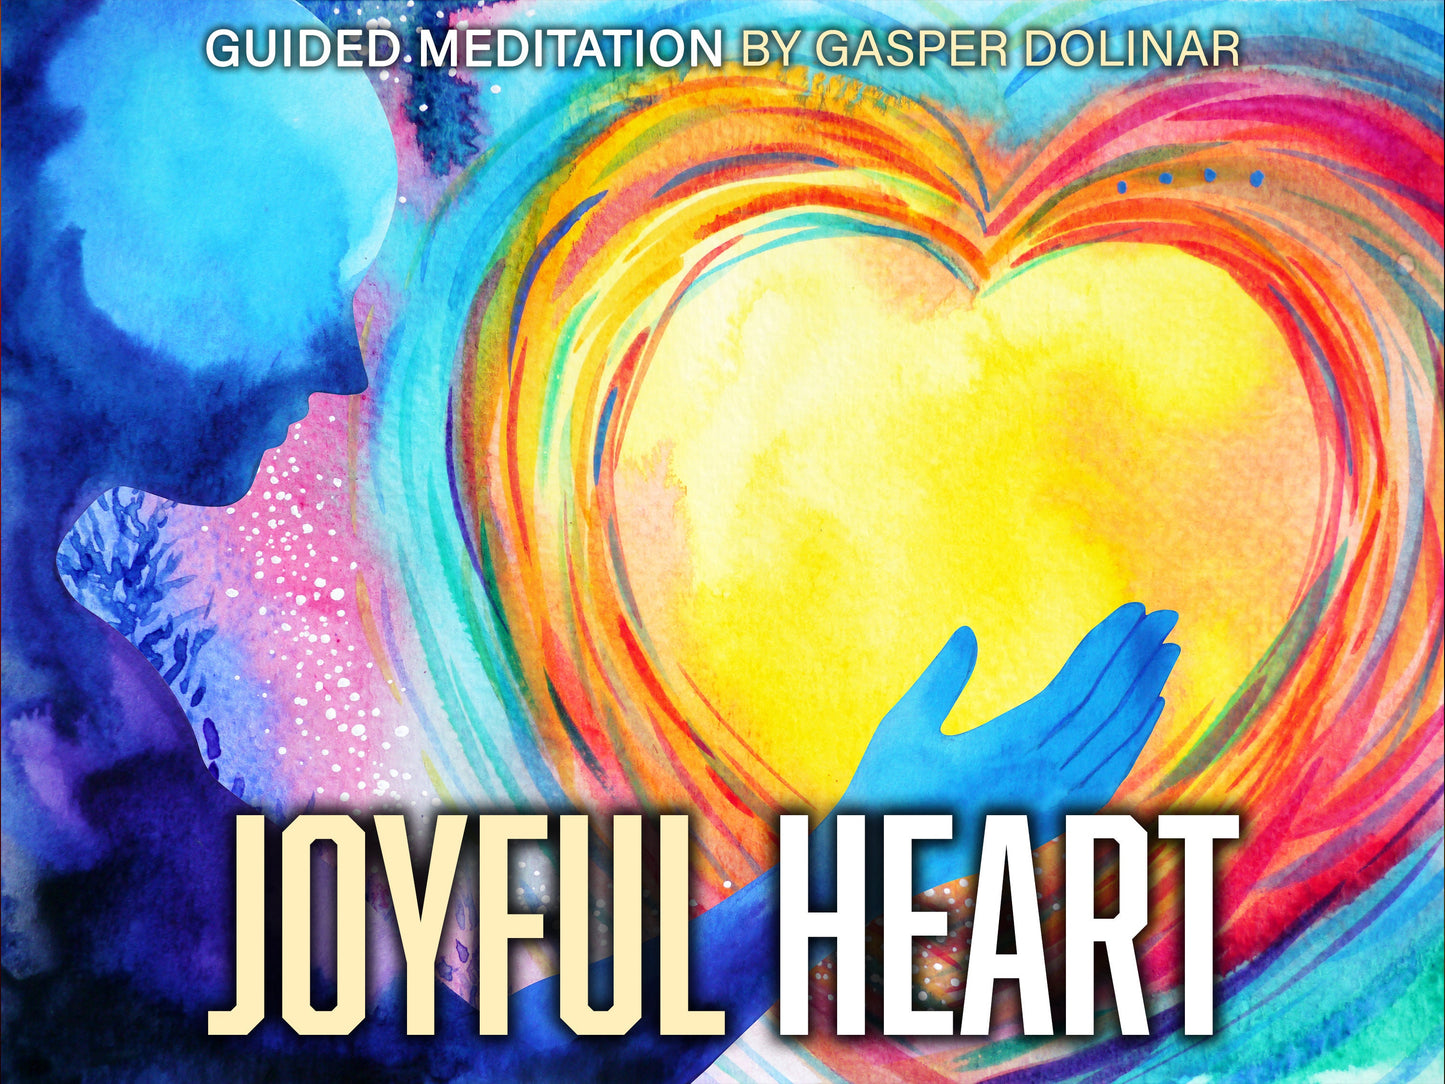 Guided Meditation - Joyful Heart by Gasper Dolinar